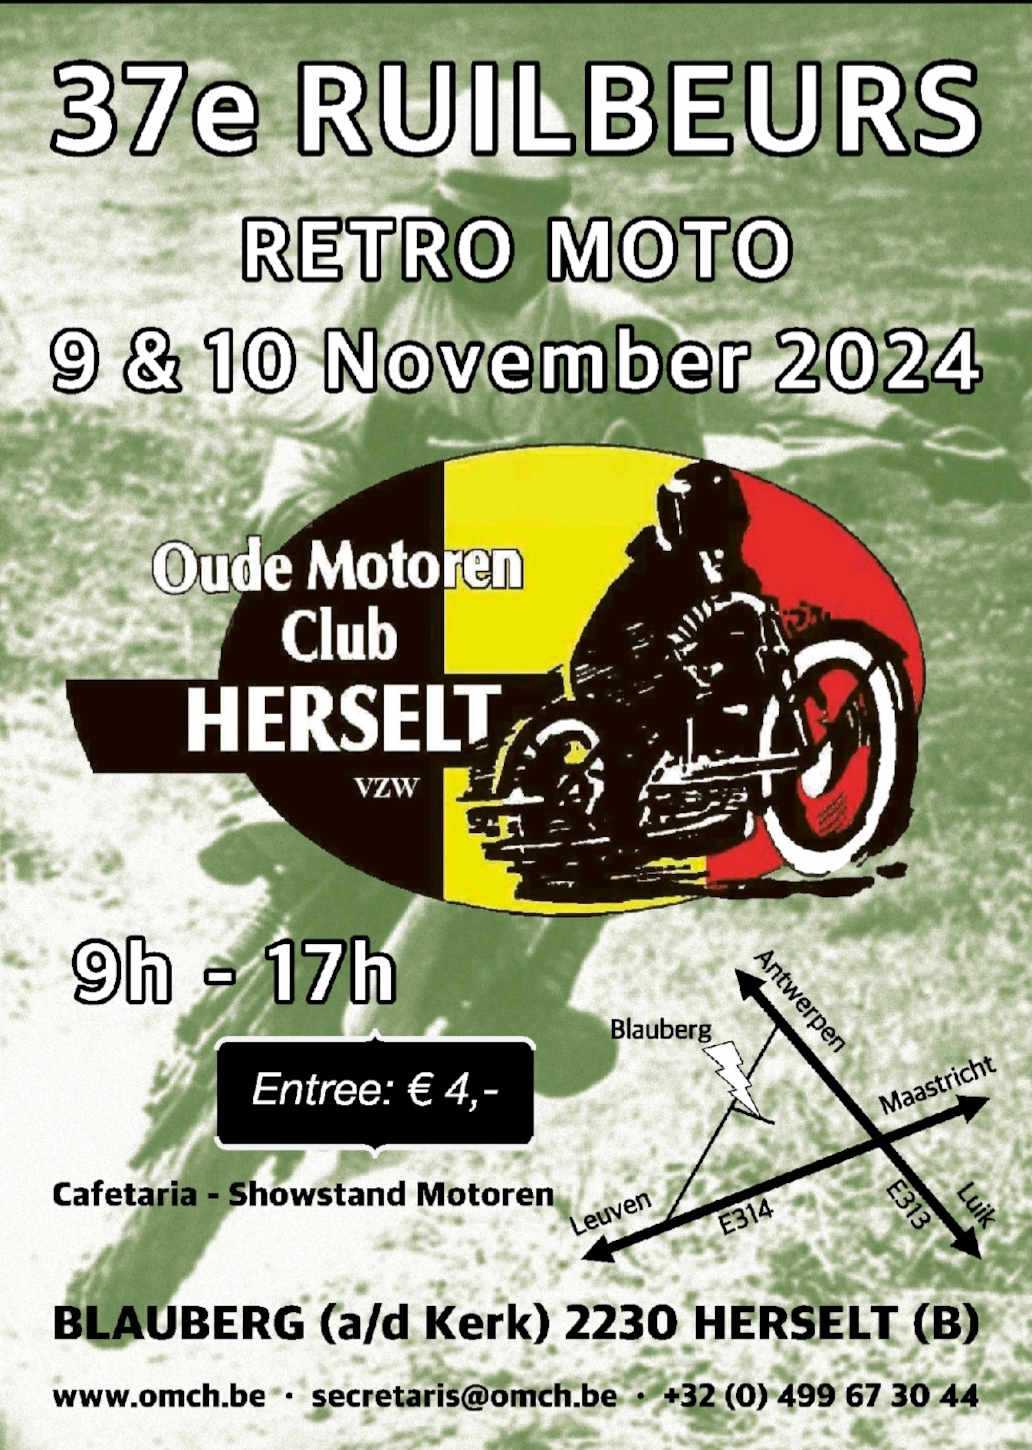 37ste Ruilbeurs Retro Moto in Blauberg (Herstelt)